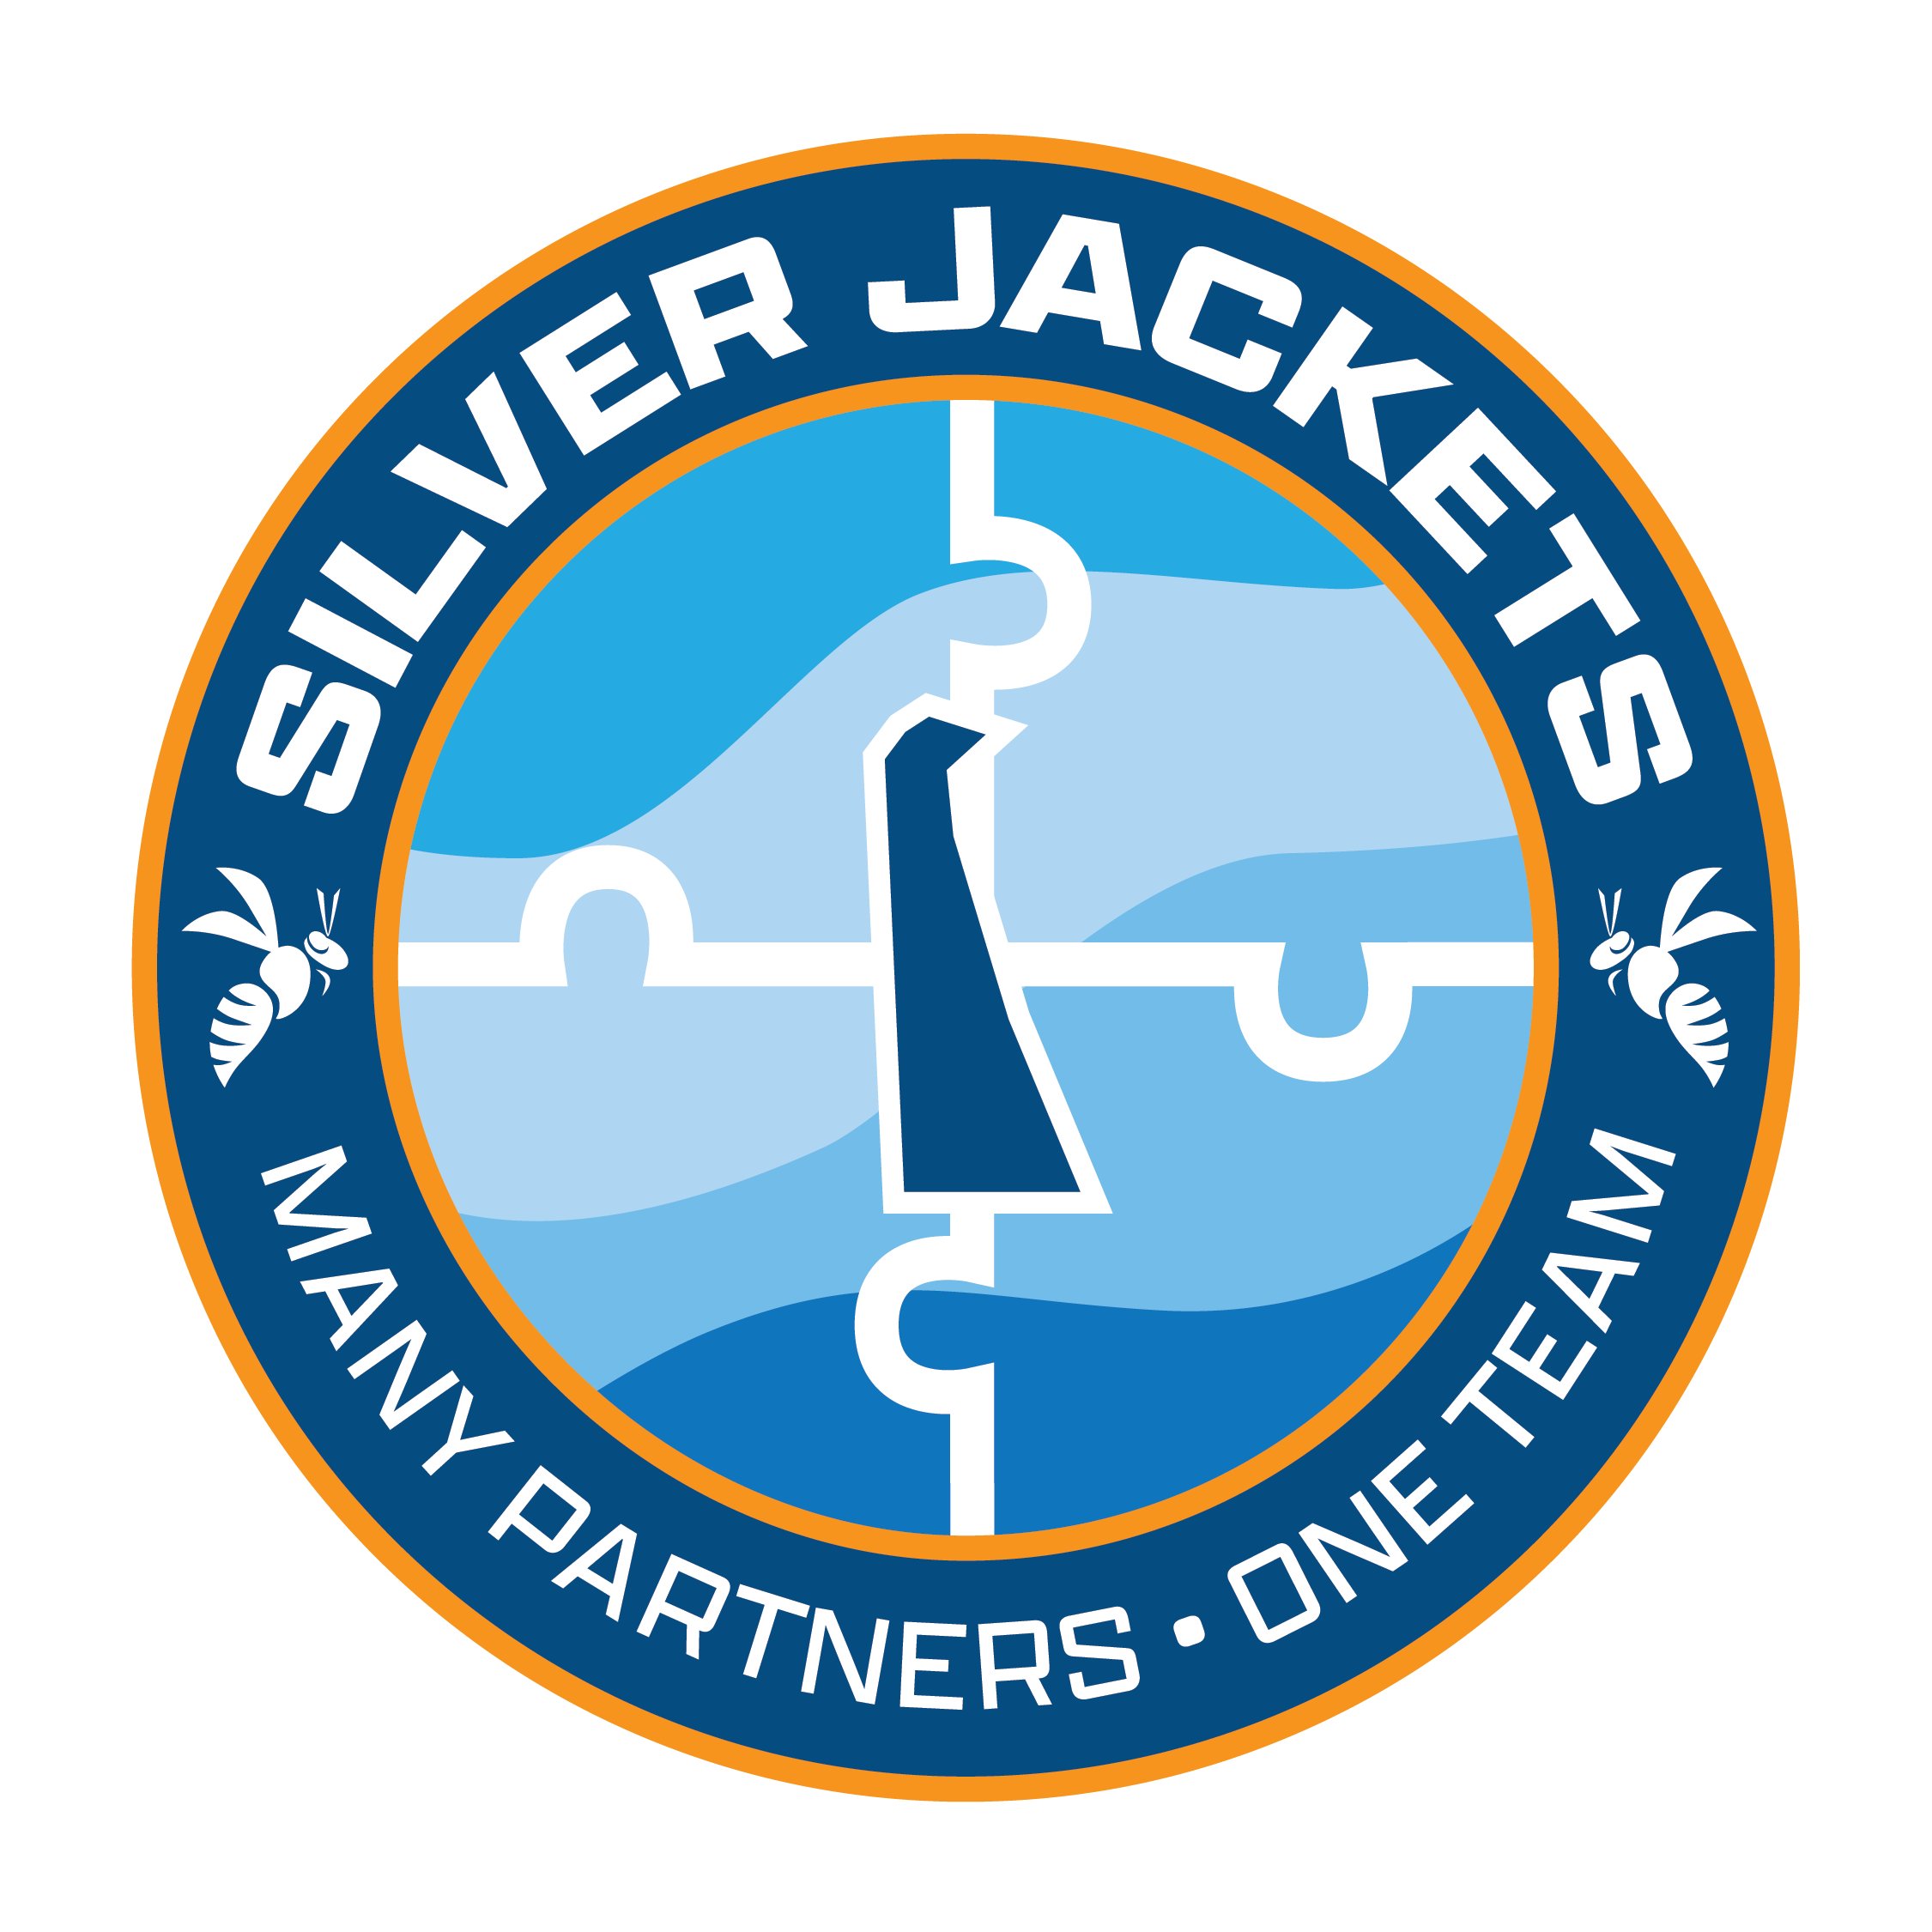 Delaware Silver Jackets logo